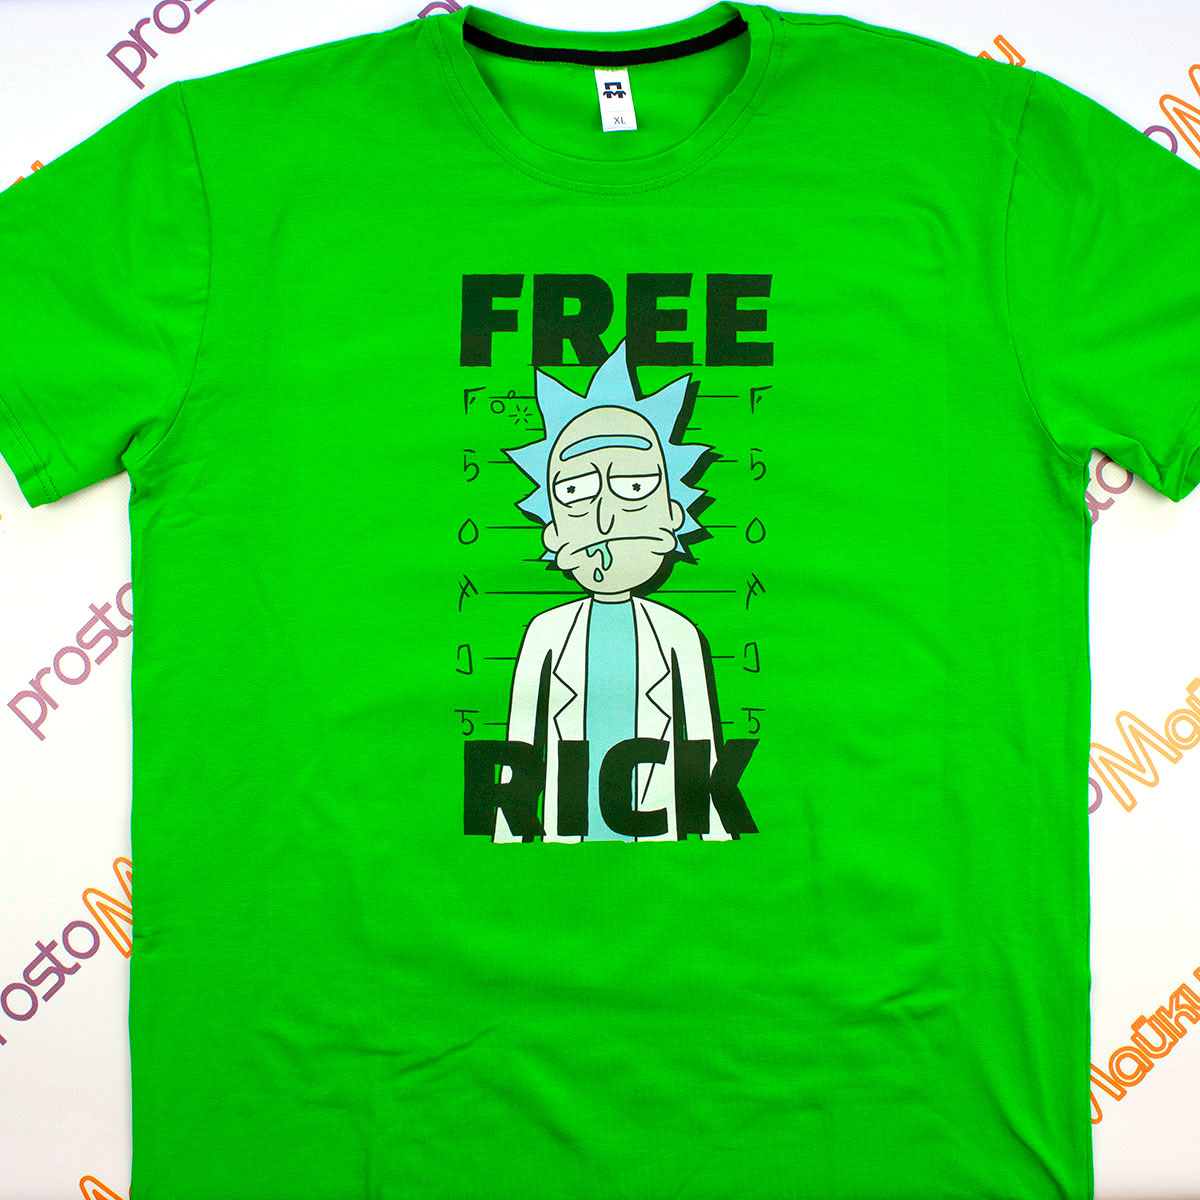 Футболка Free Rick